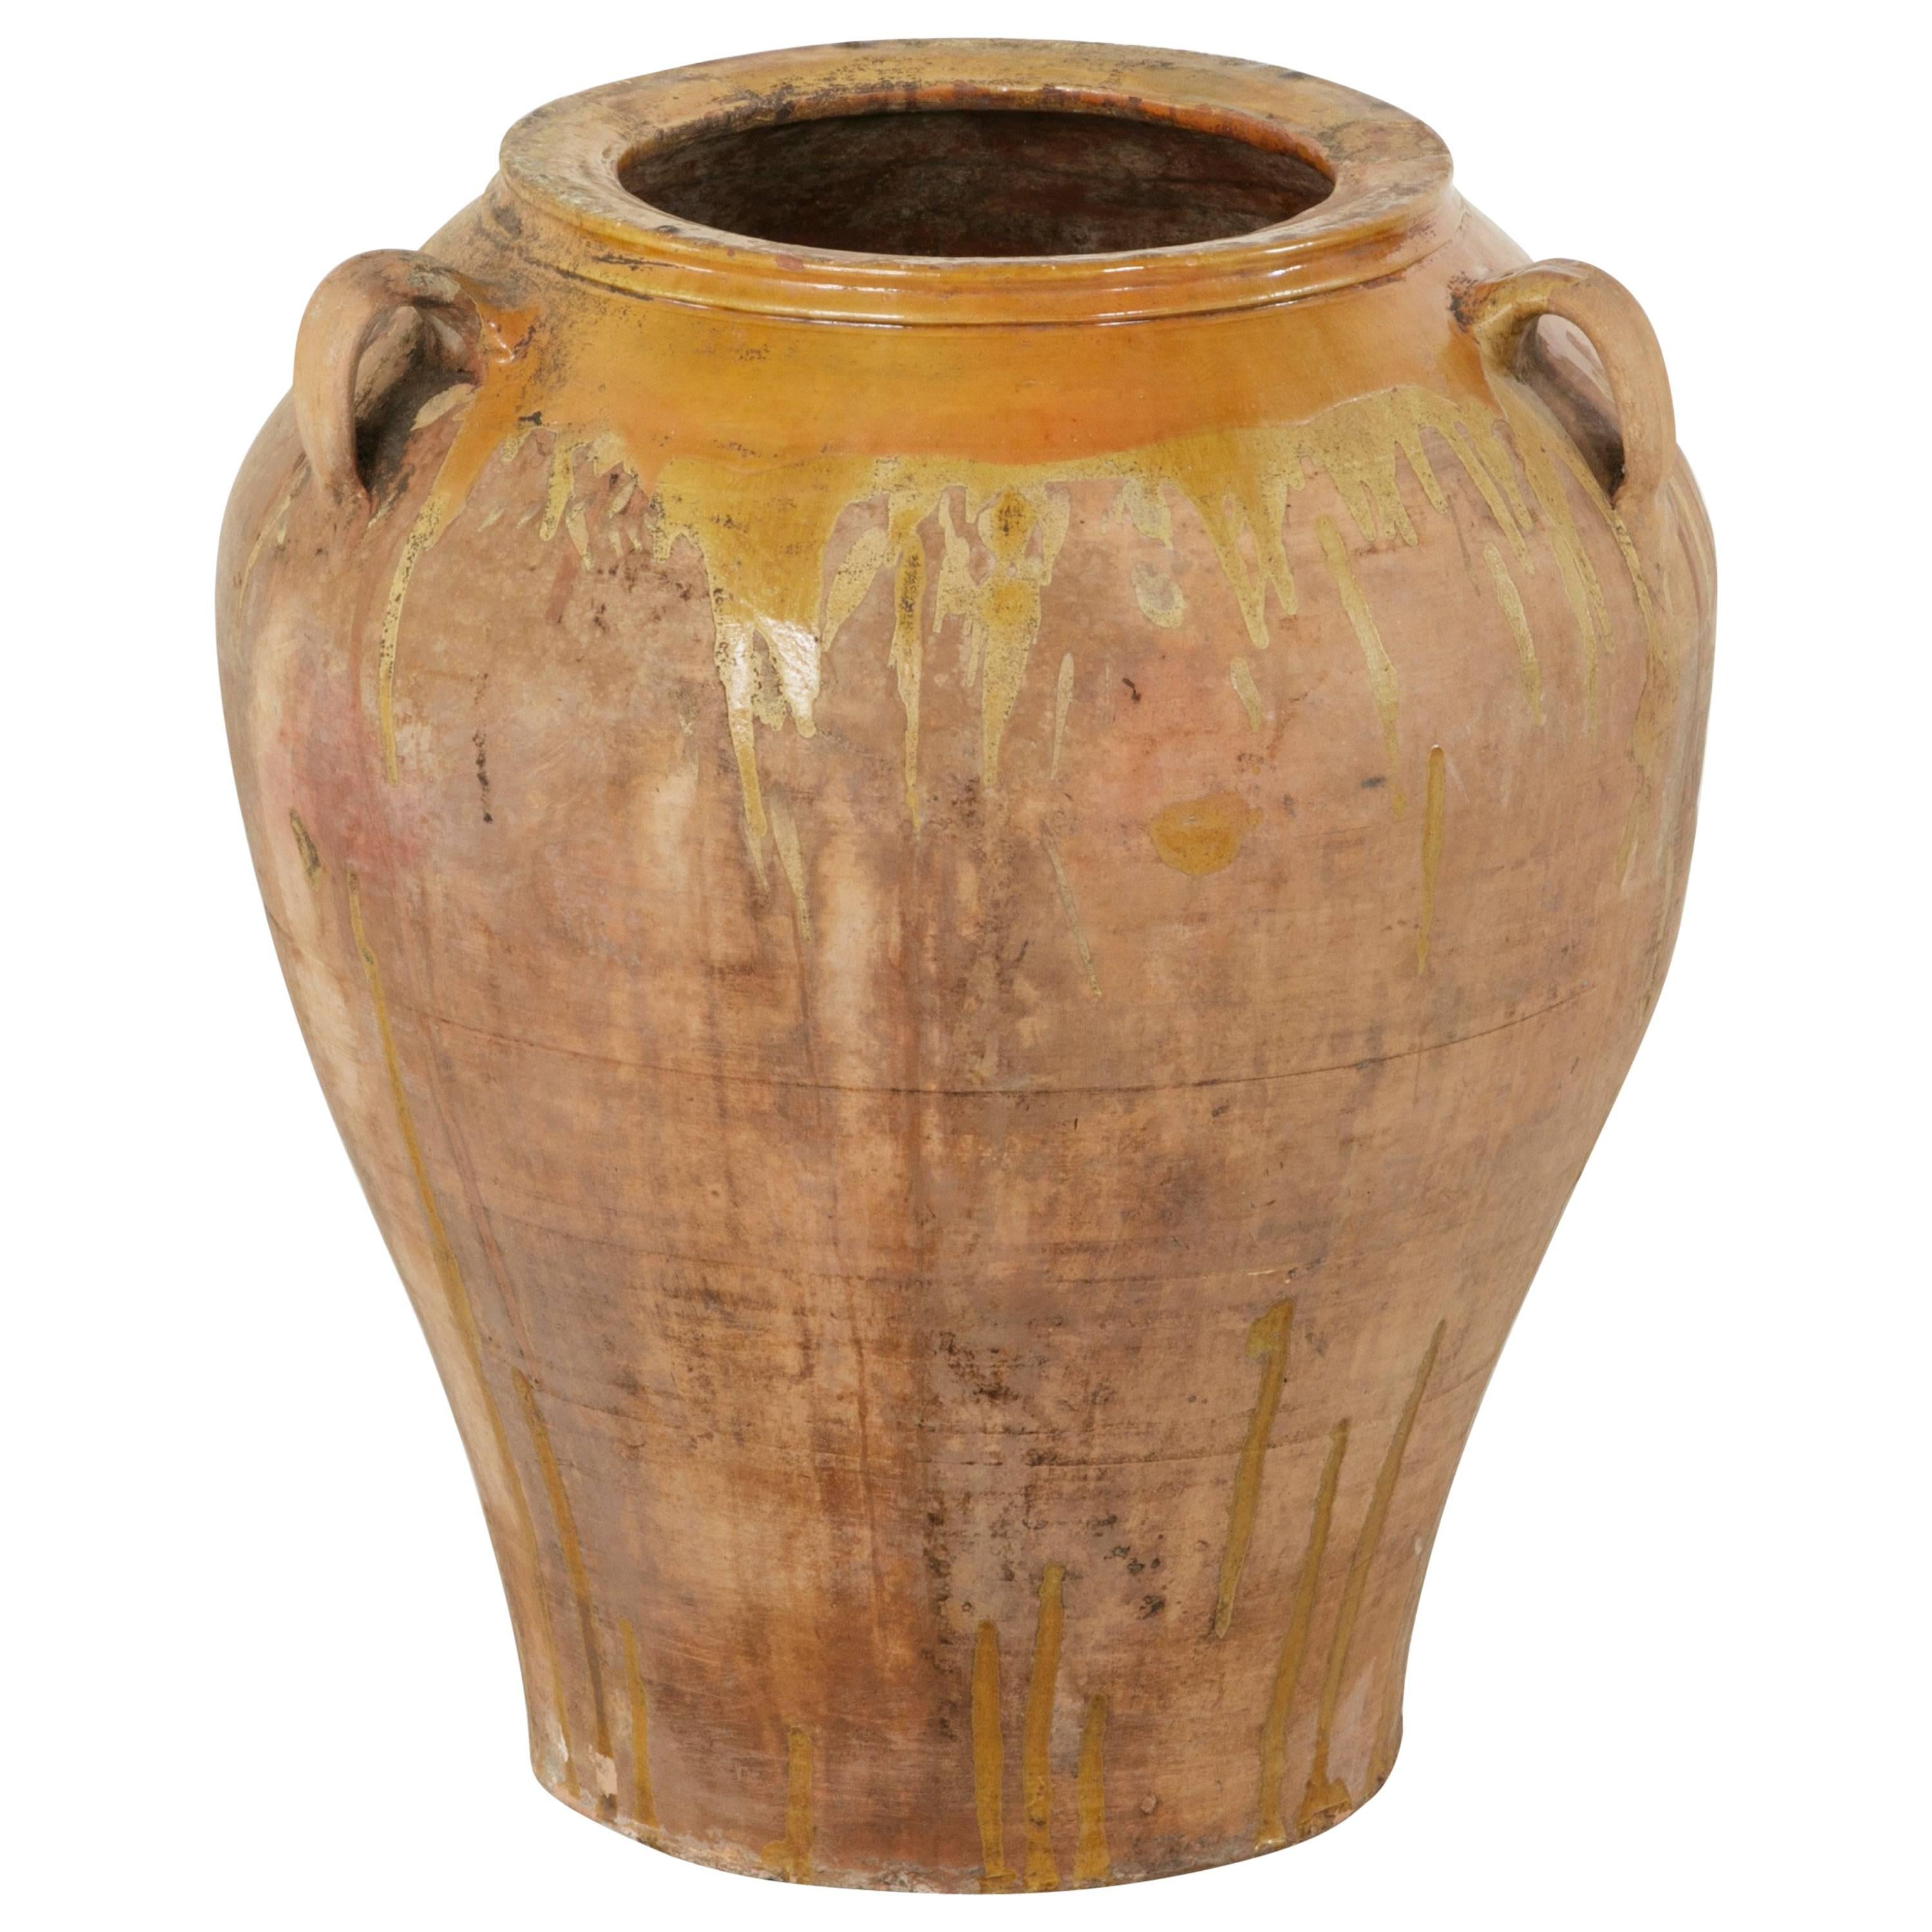 Large 19th Century Spanish Catalan Terracotta Olive Jar or Urn with Yellow Glaze